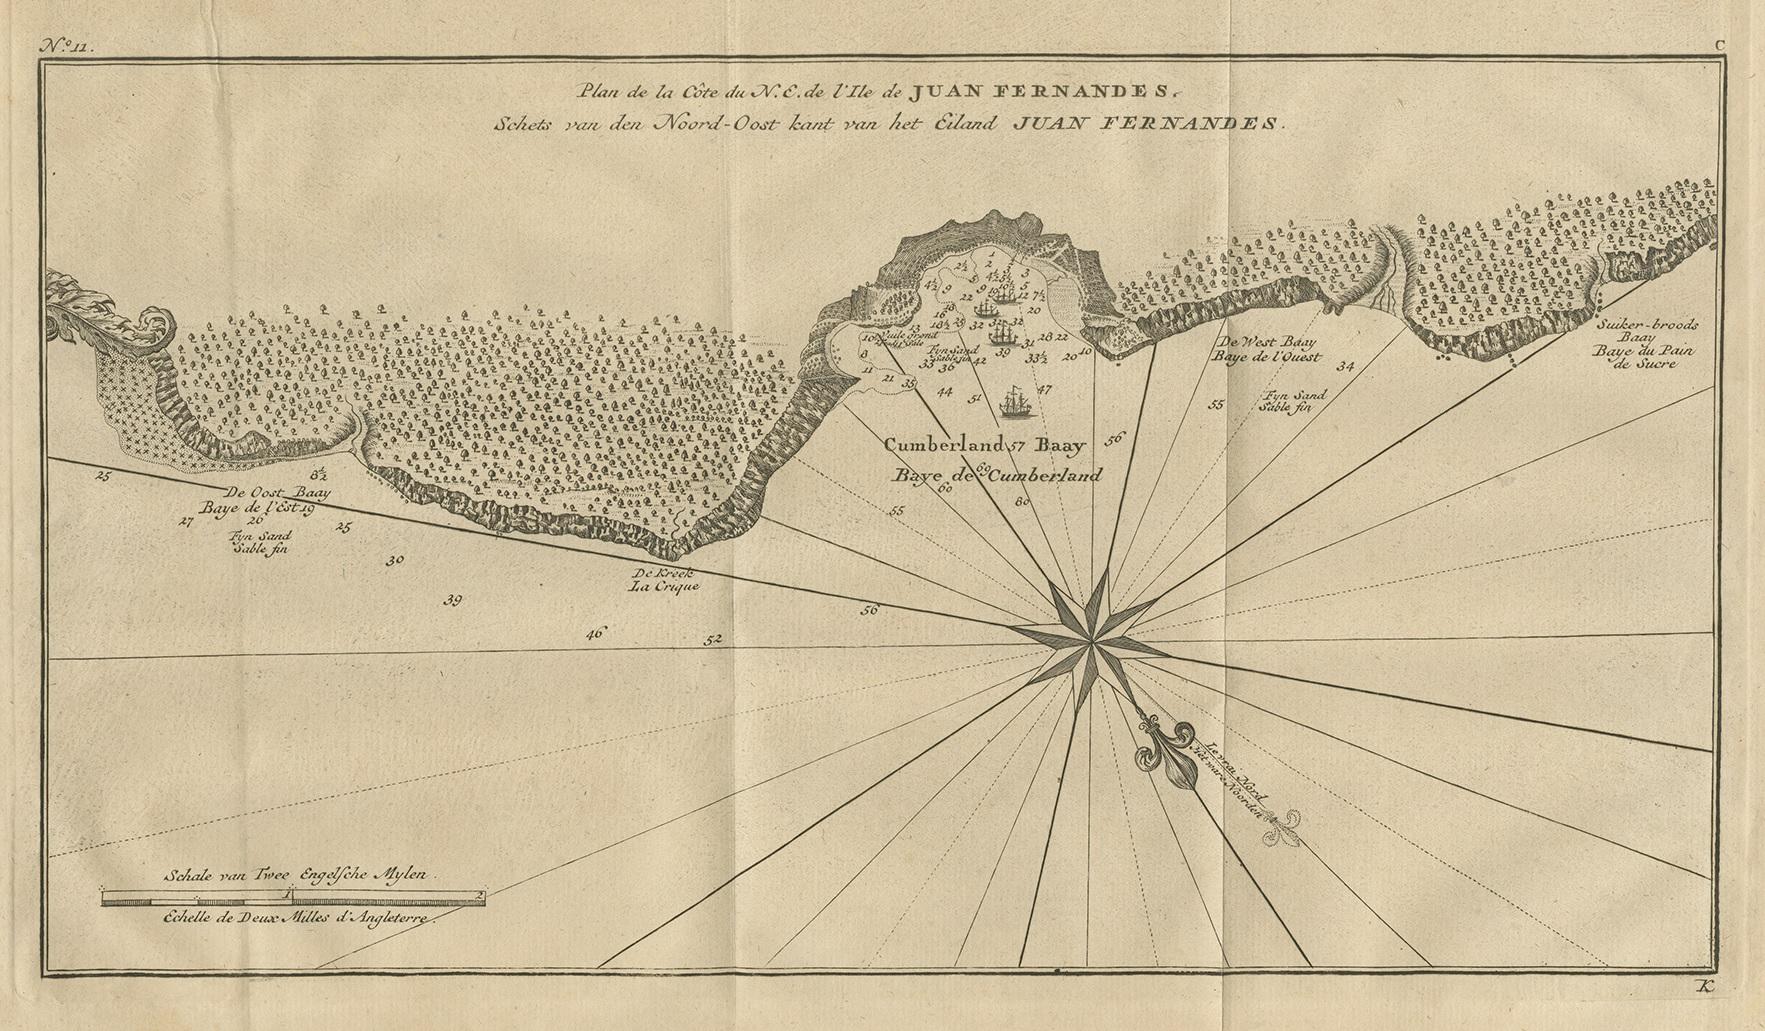 Antike Karte mit dem Titel 'Plan de la Côte du N.E. de l 'Ile de Juan Fernandes - Schets van den Noord-Oost kant van het eiland Juan Fernandes '. Diese Karte zeigt die Nordostküste der Insel Juan Fernandez mit der Cumberland Bay, Südamerika. 

1740